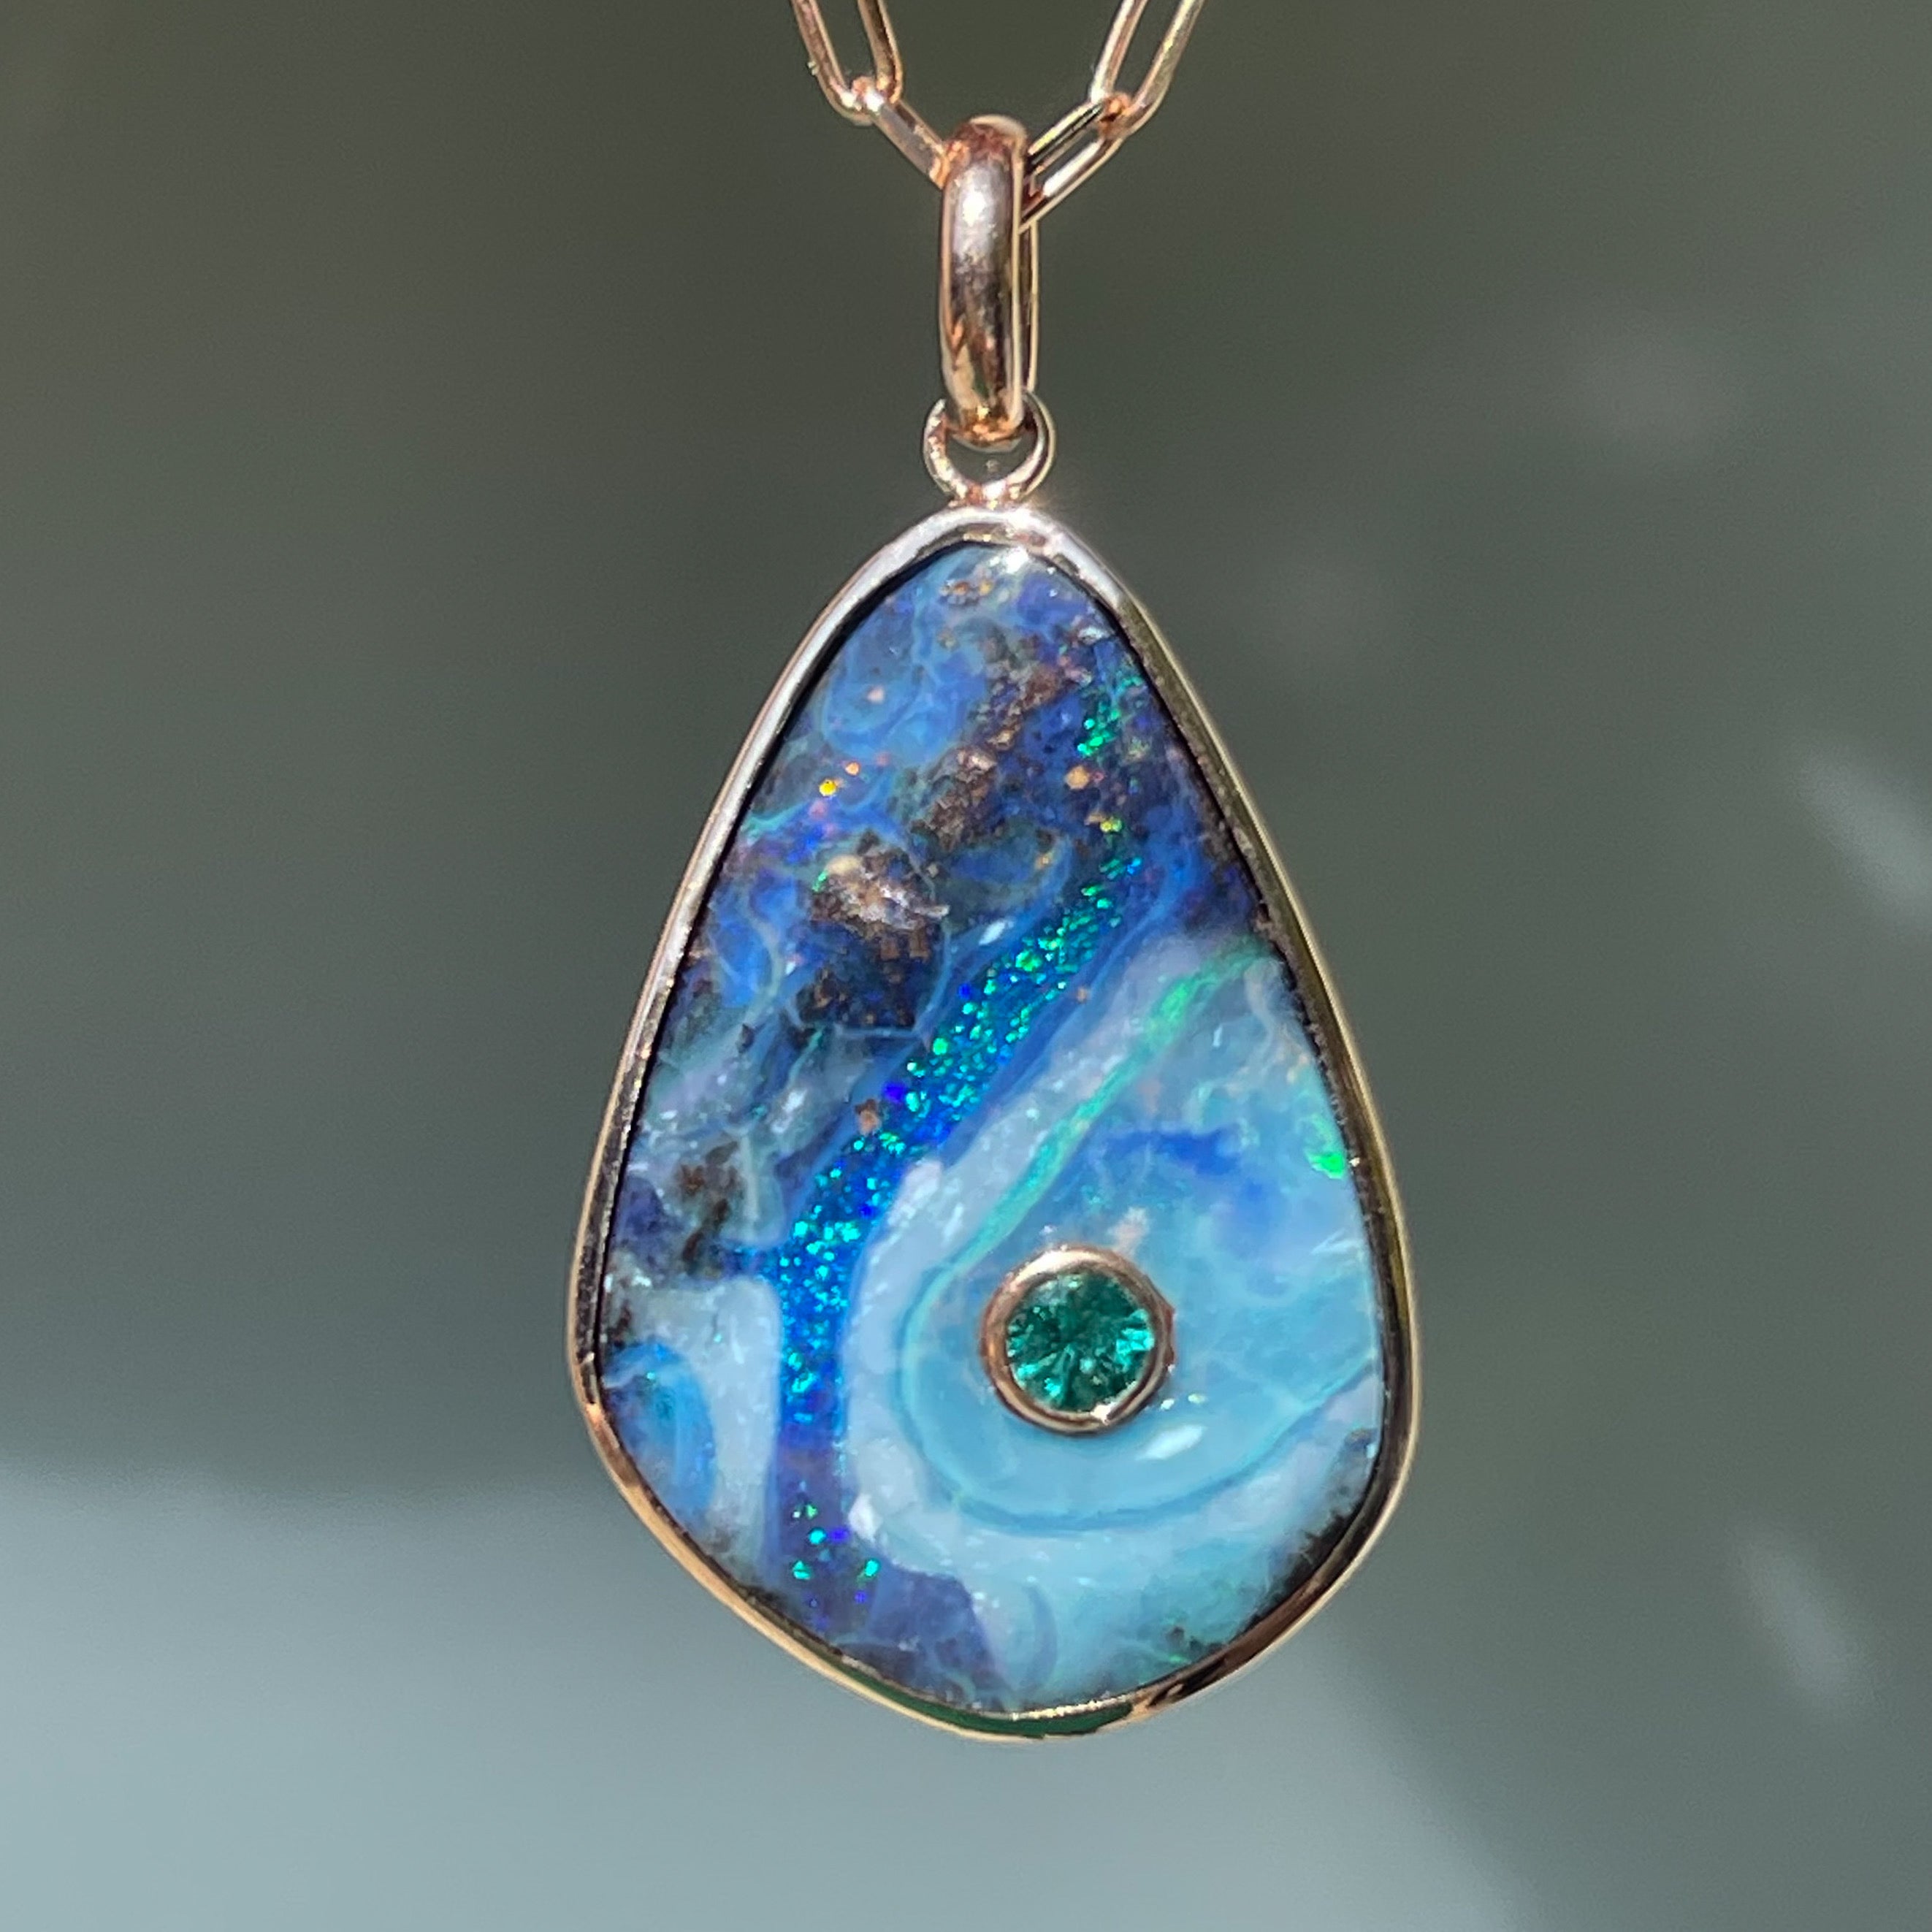 Fire Opal Pendant Necklace - 925 Sterling Silver – The ArtSea Shop & Studio